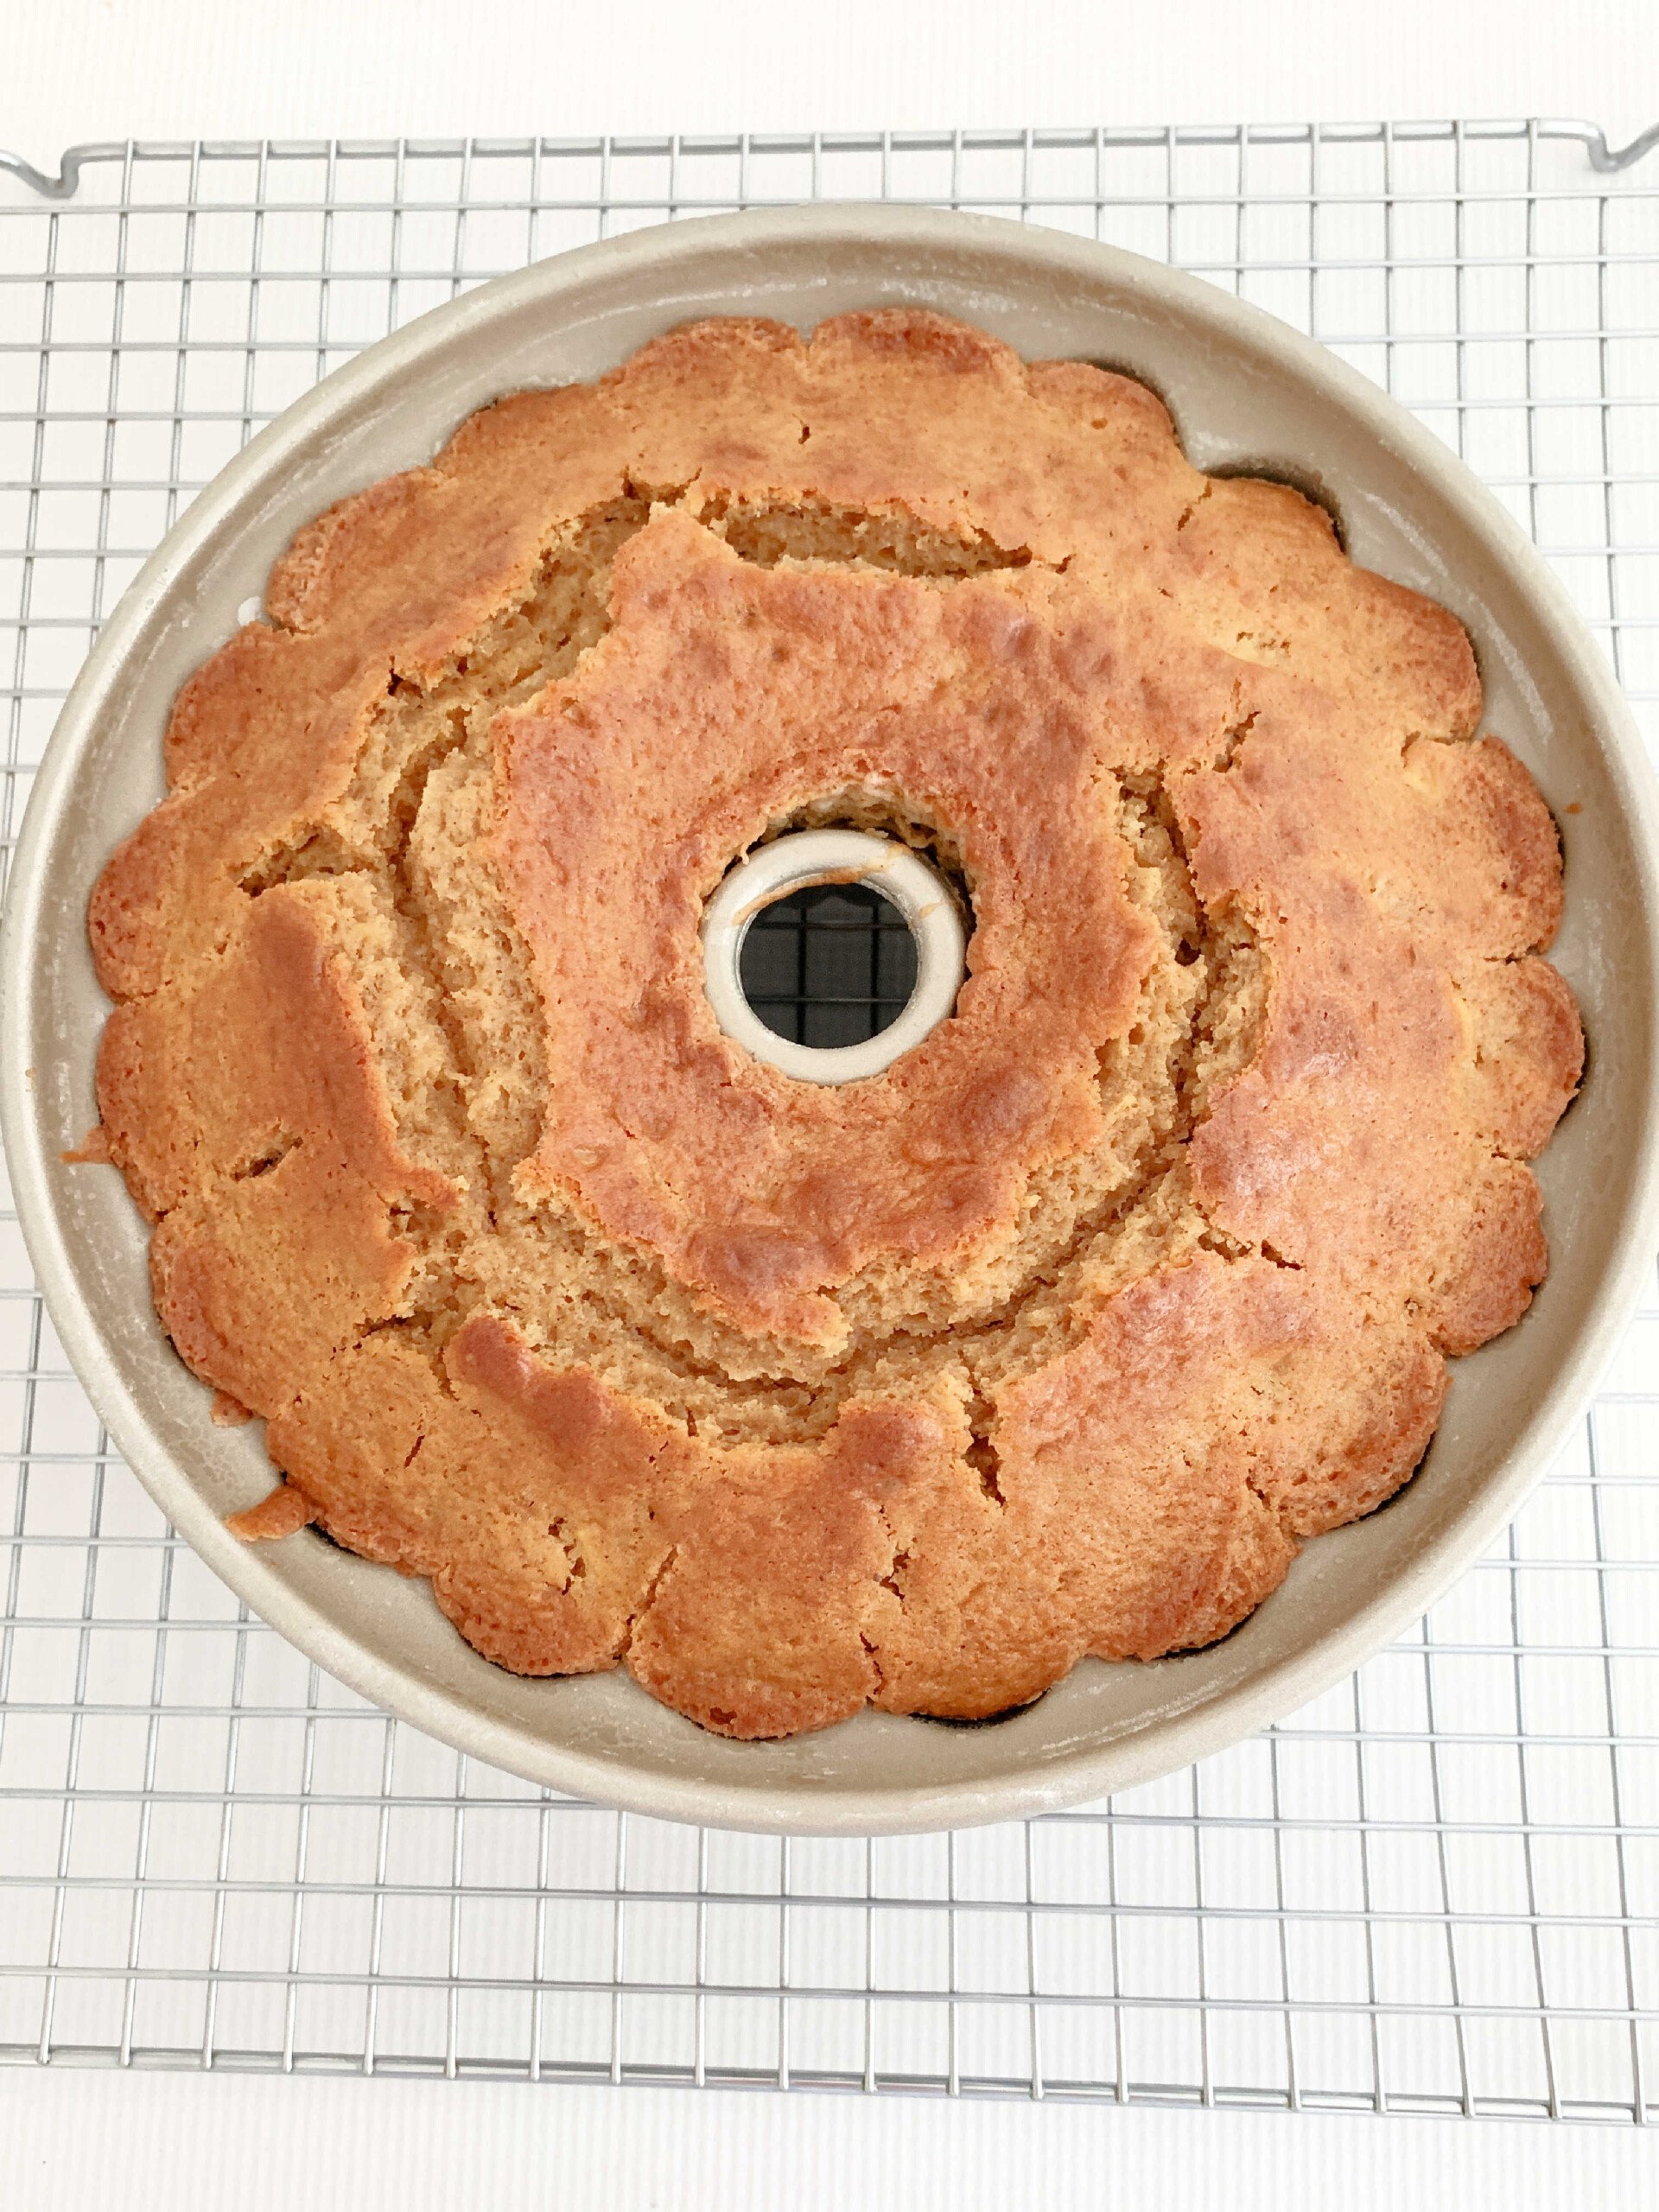 Baked Apple Bundt Cake, freshly baked, in bundt pan cooling on wire rack.